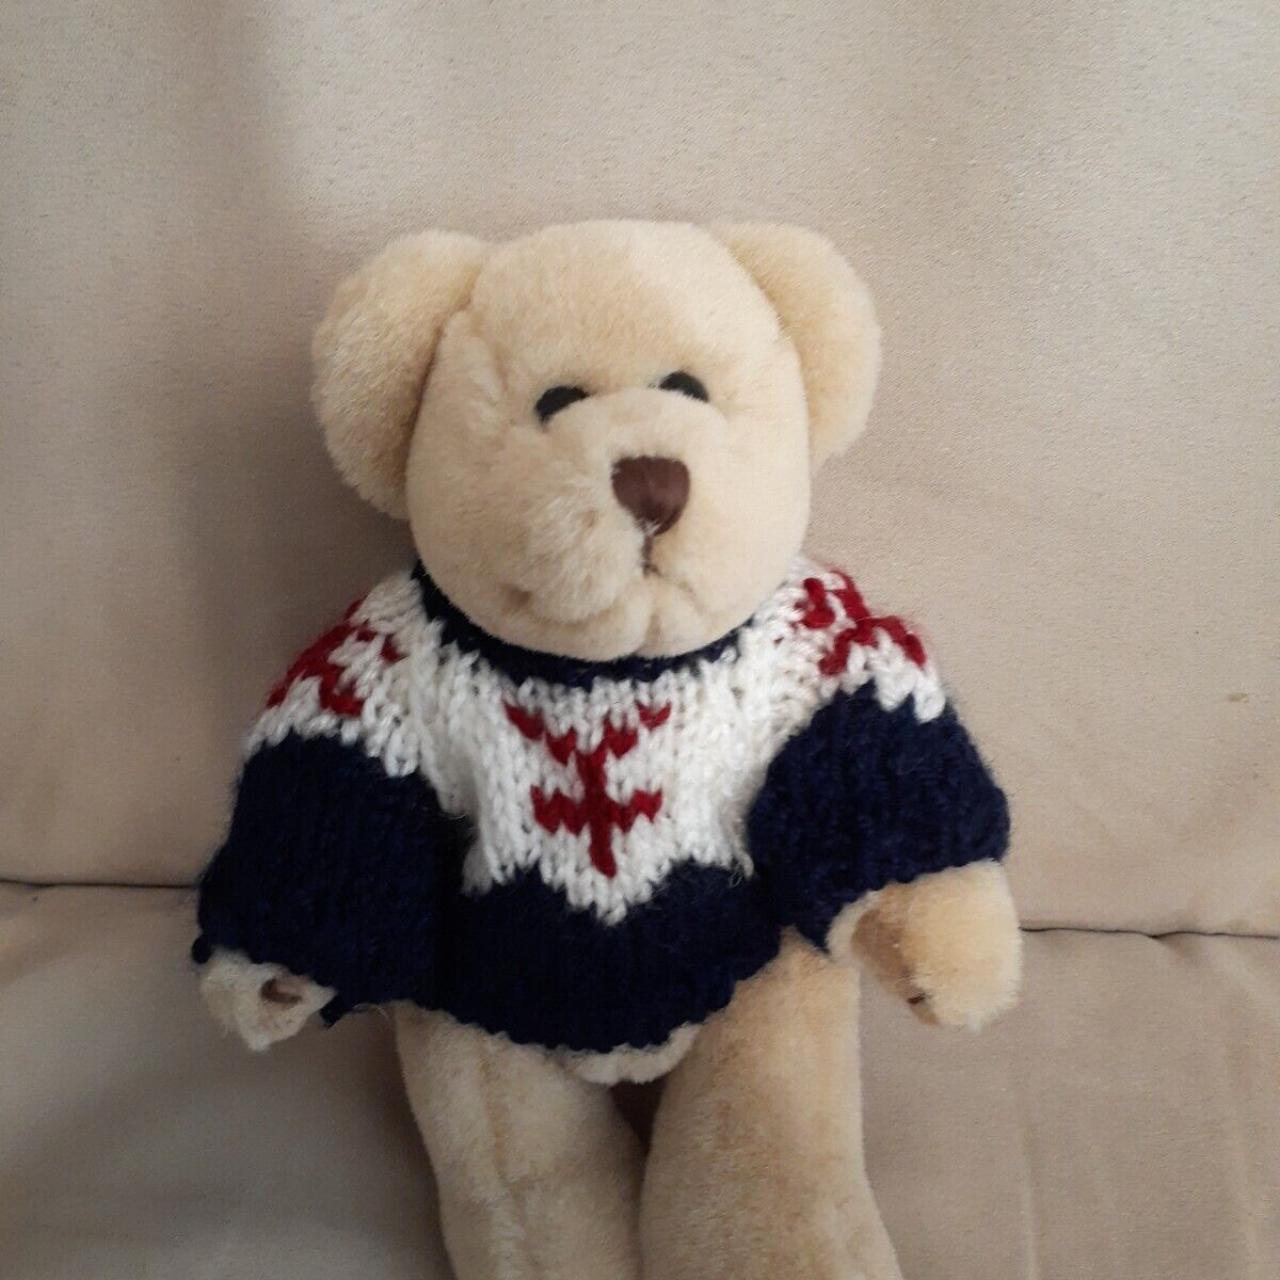 Chrisha Playful Plush Teddy Bear Wearing Christmas... - Depop